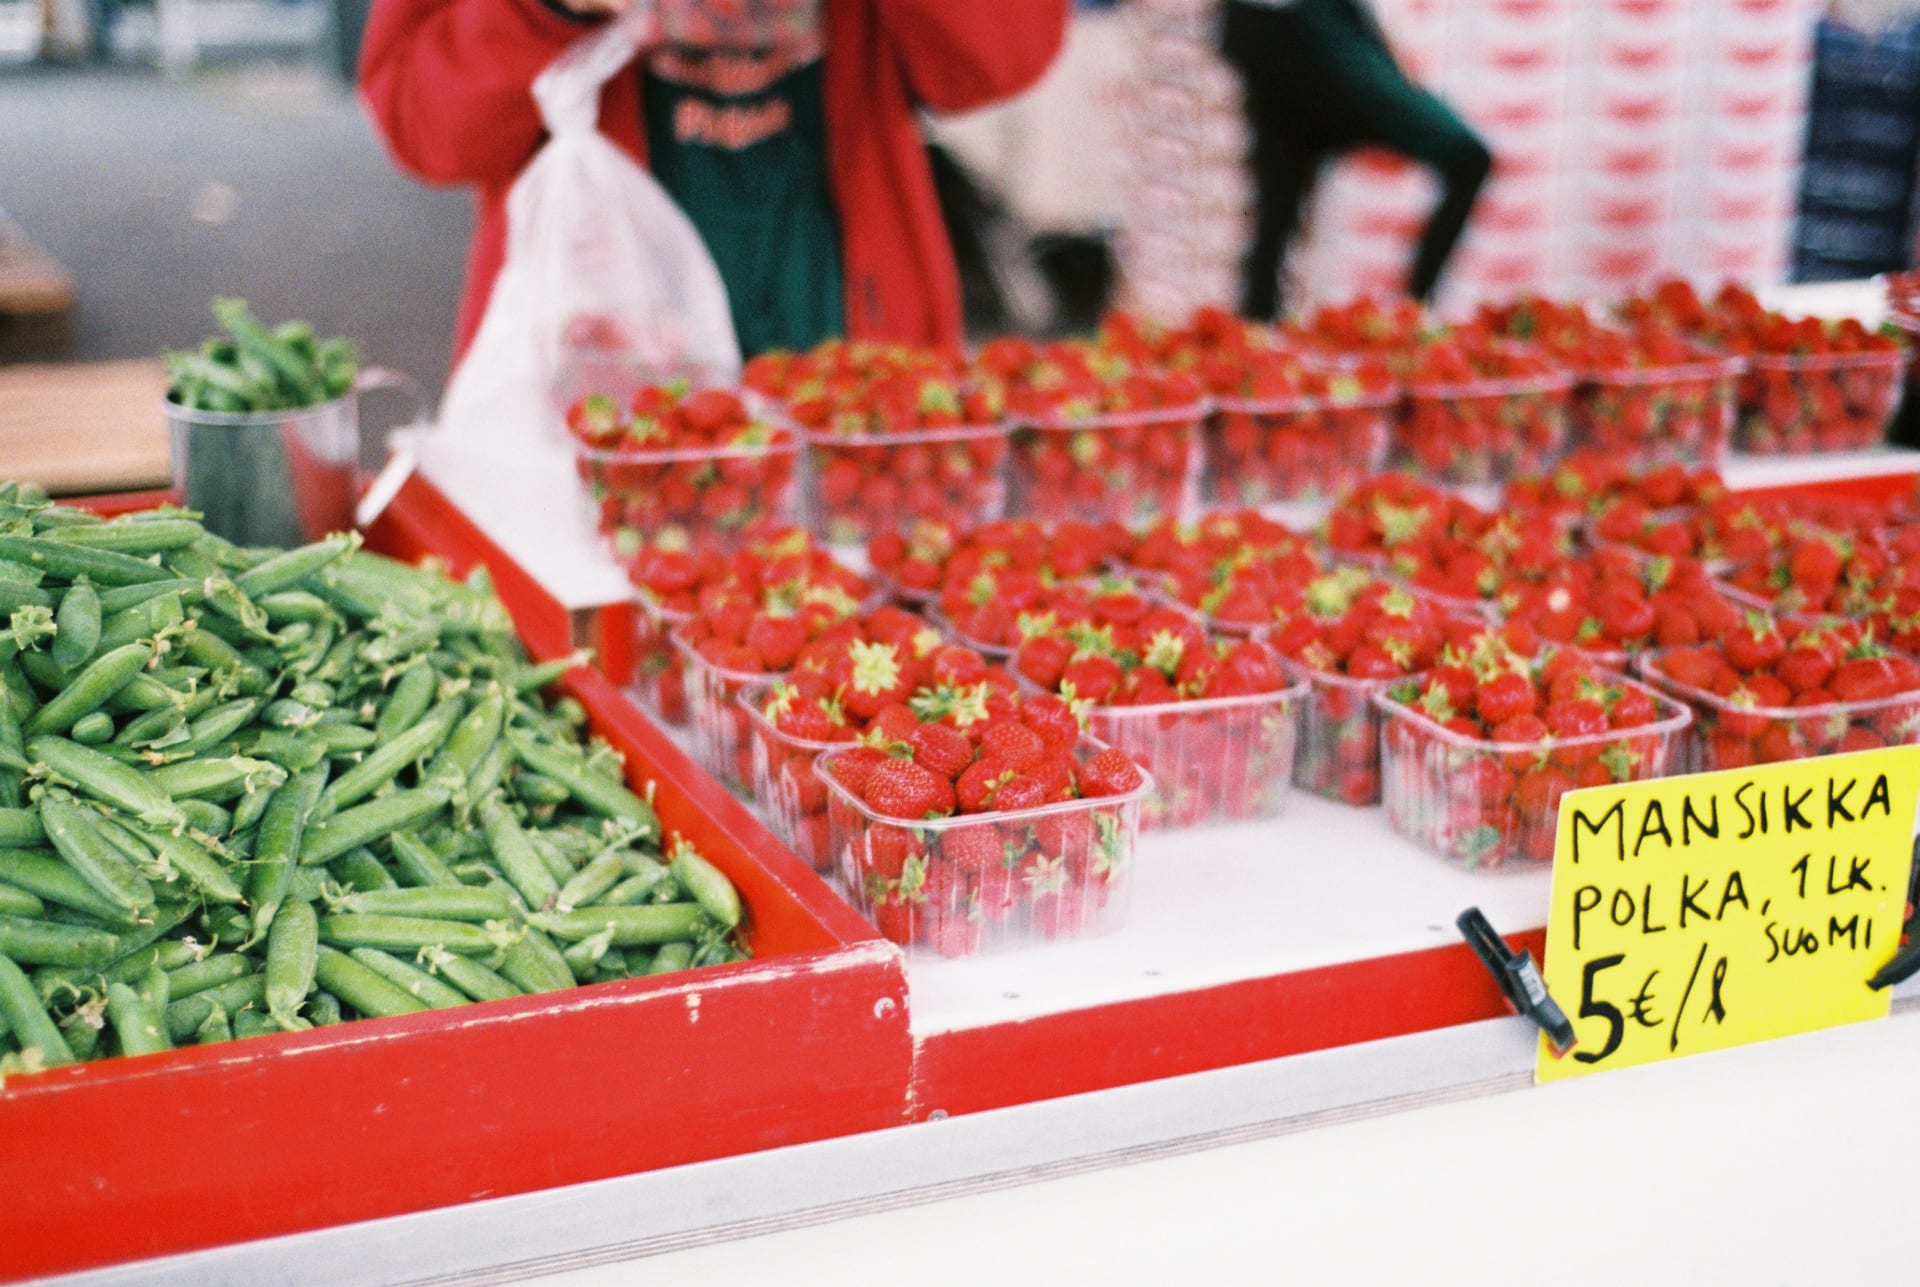 Strawberries for sale in Tammelantori